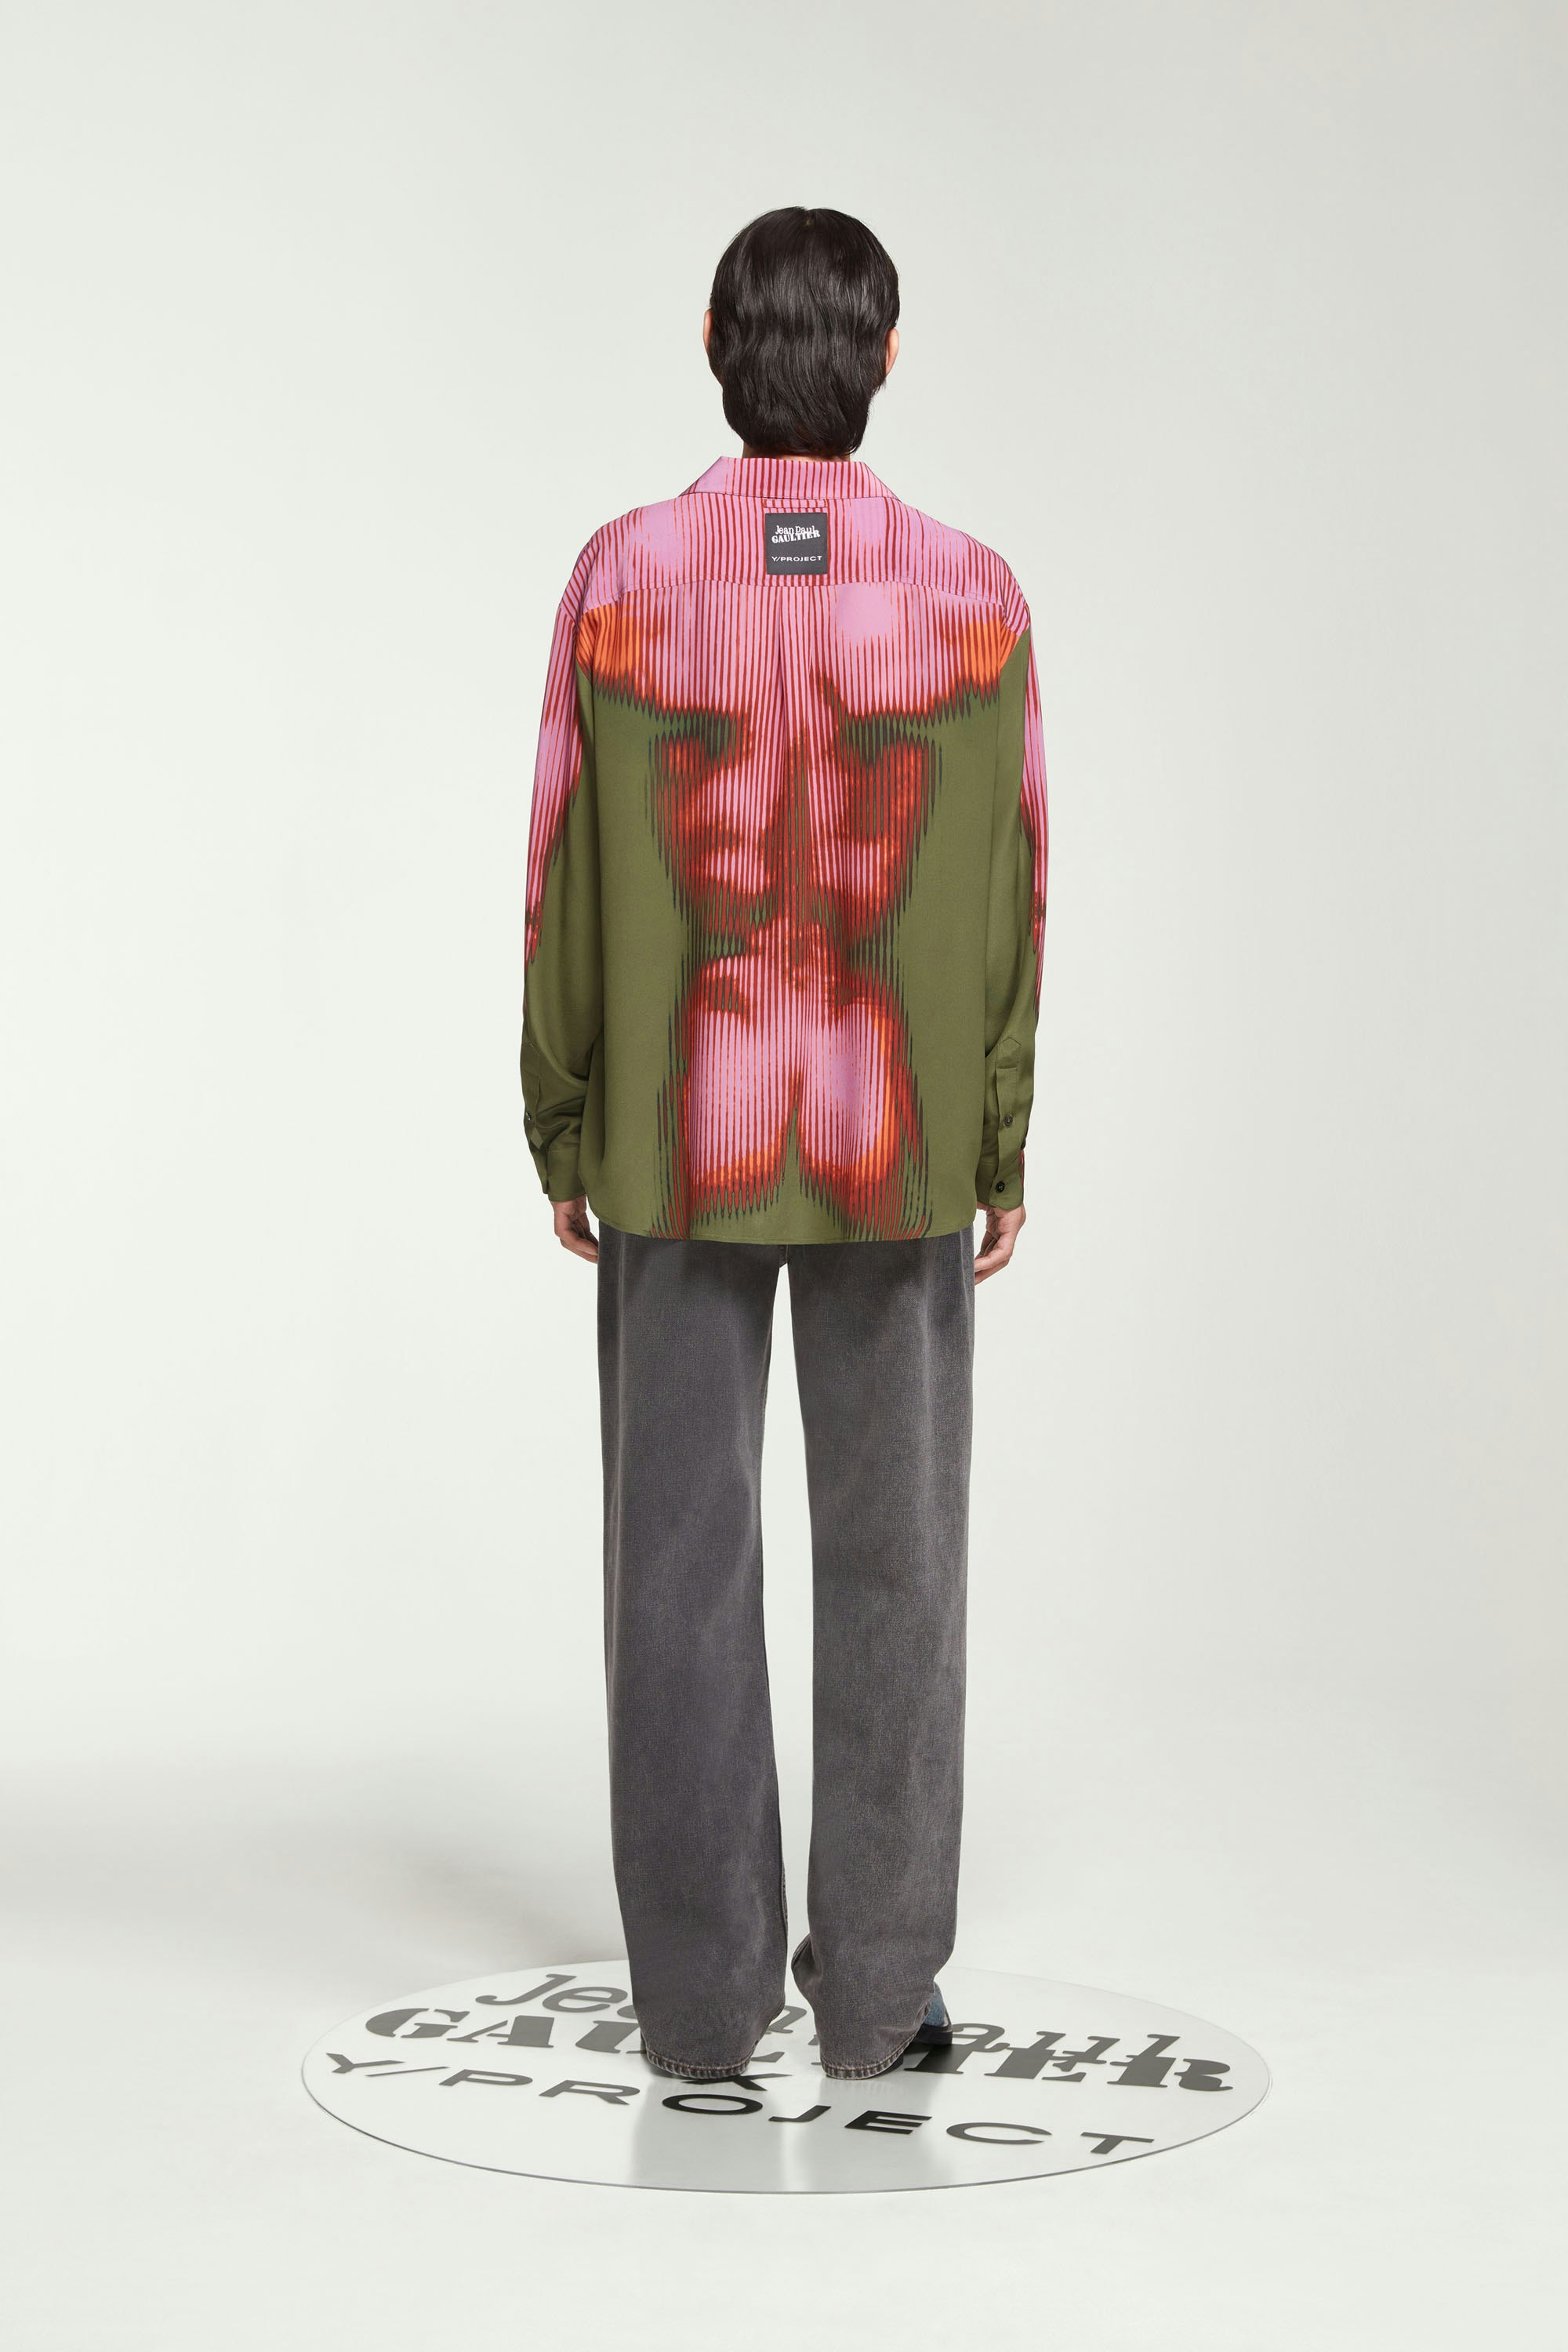 The Pink & Khaki Body Morph Pyjama Top by Jean Paul Gaultier x Y/Project